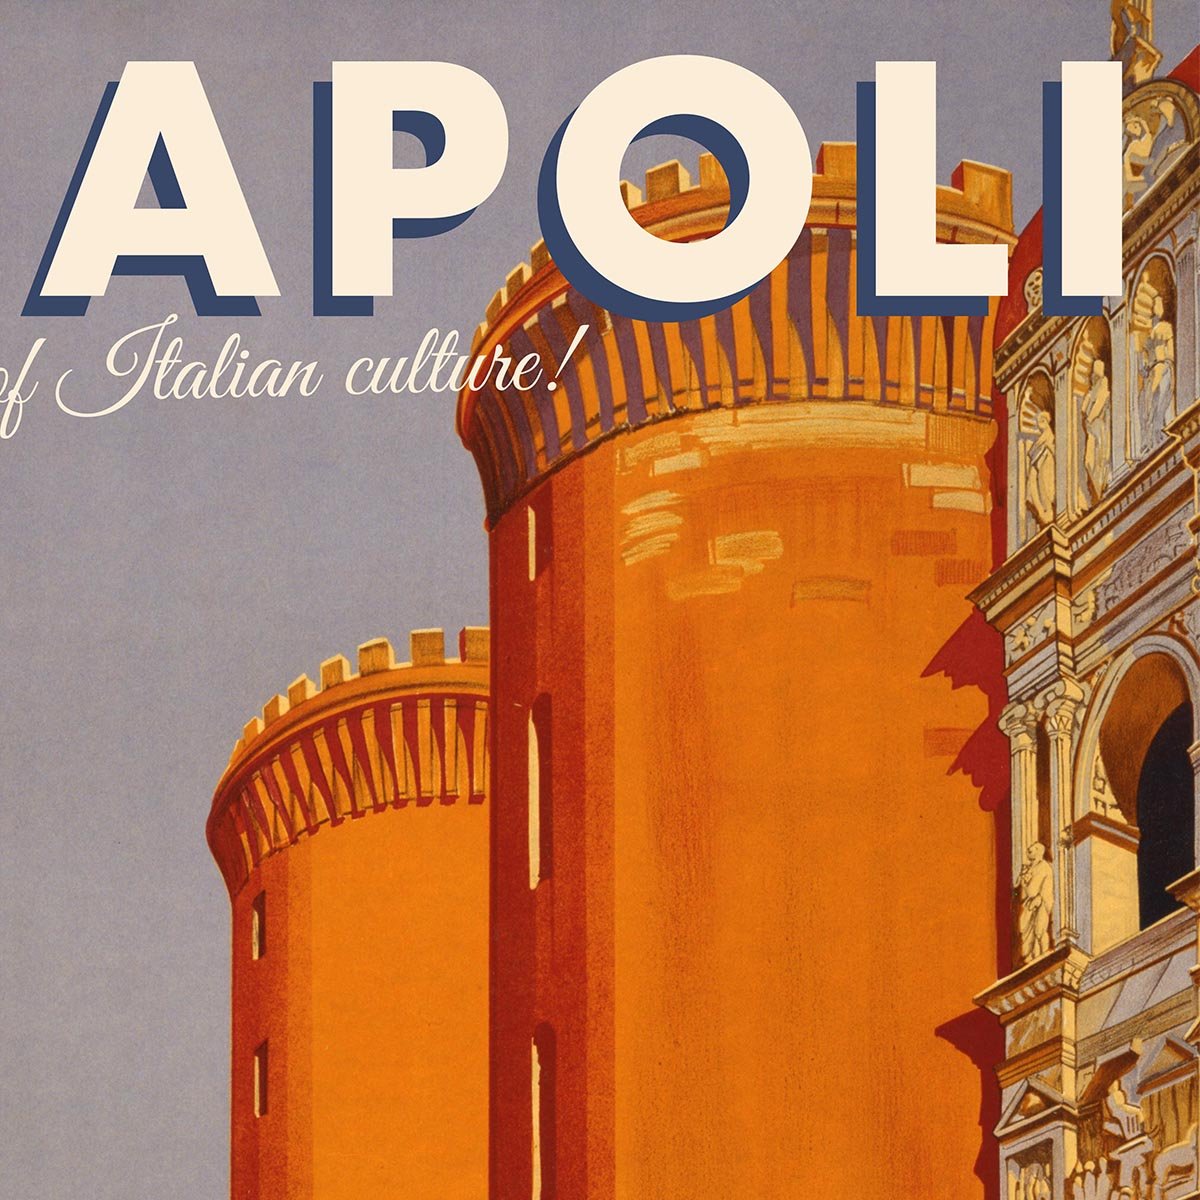 Napoli Italy Travel Poster